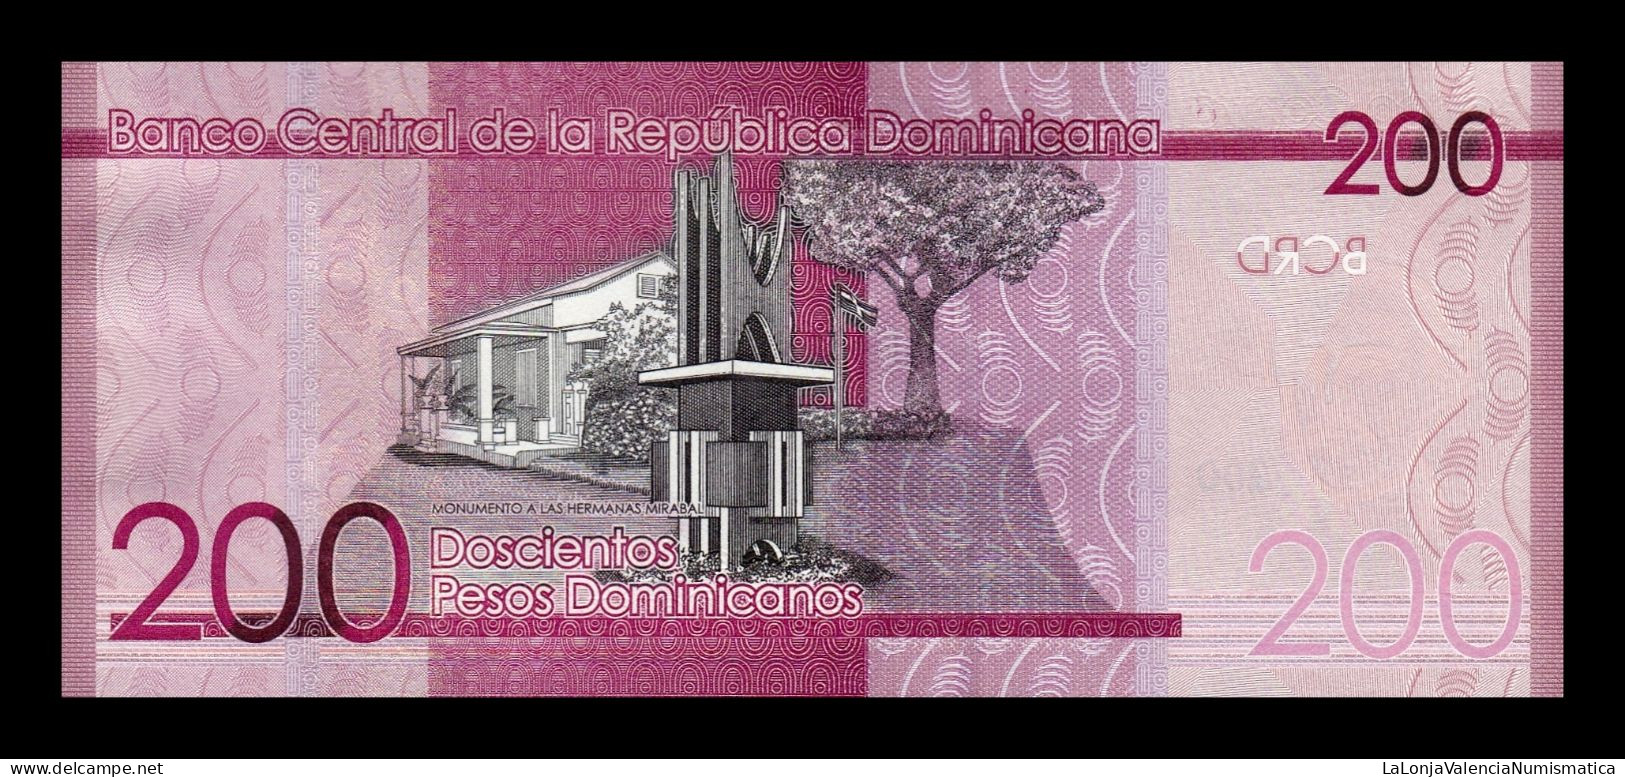 República Dominicana 200 Pesos Dominicanos 2014 Pick 191a Low Serial 876 Sc Unc - Dominicaine